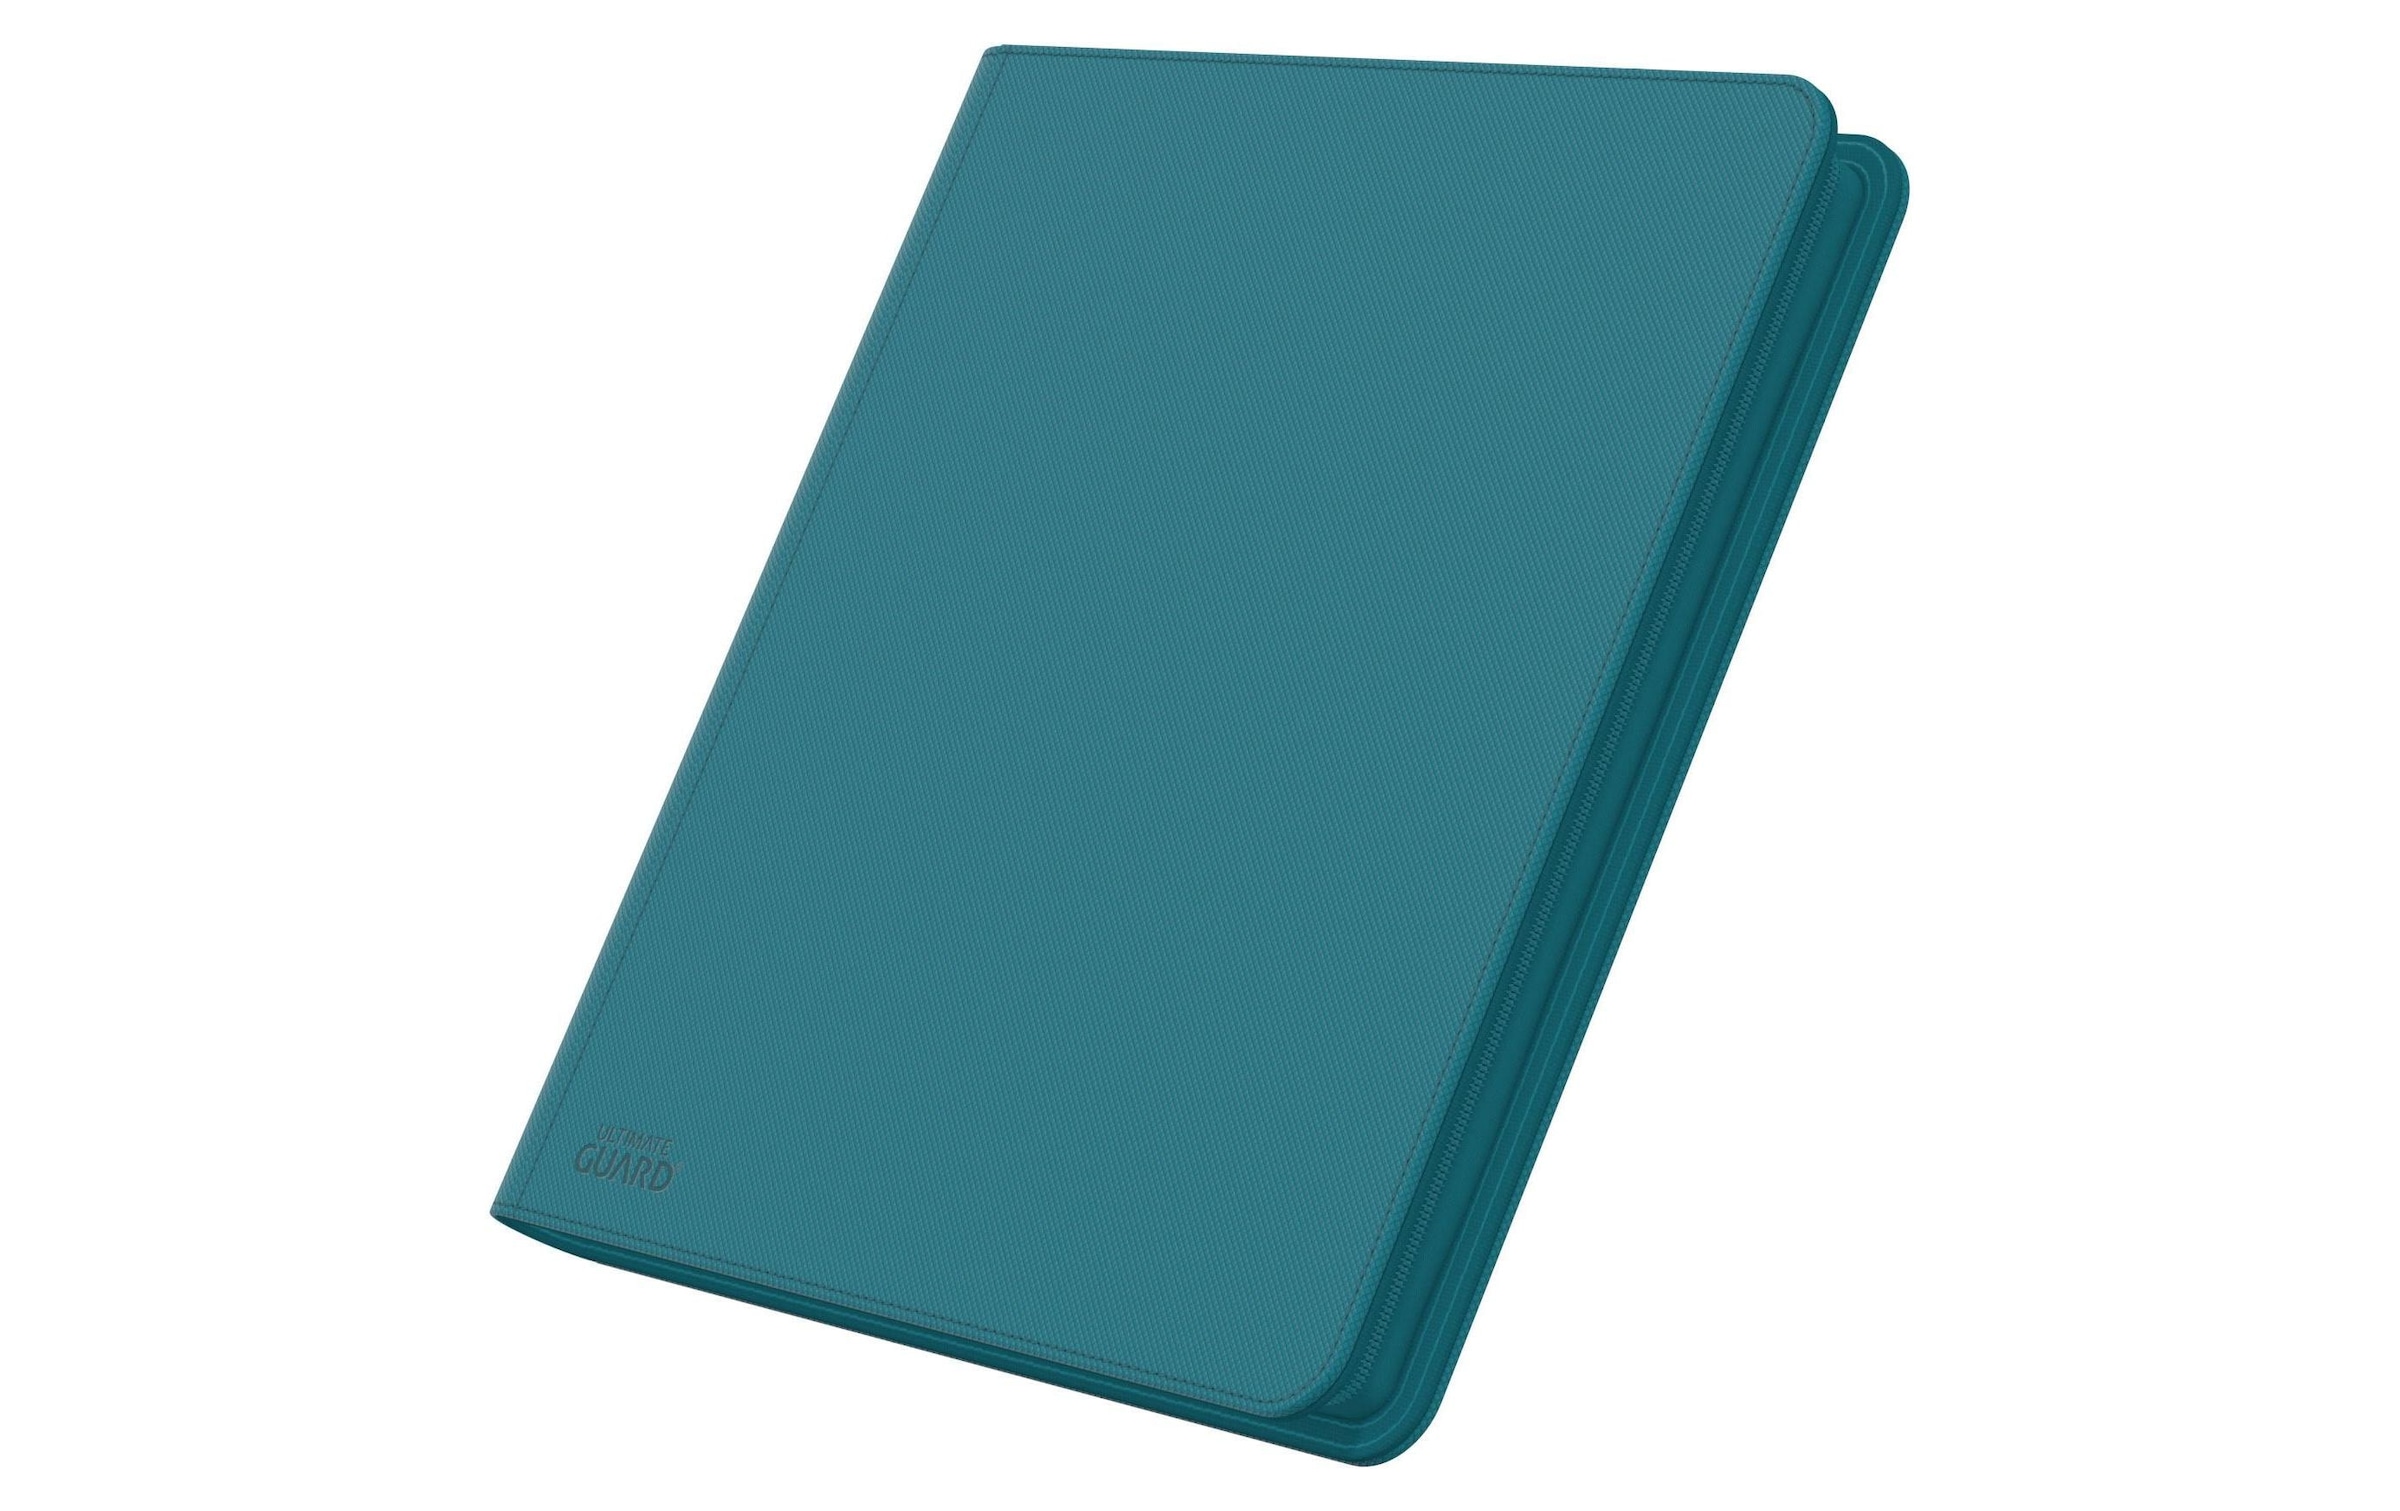 Sammelkarte »QuadRow ZipFolio 480 24-Pocket, petrolblau«